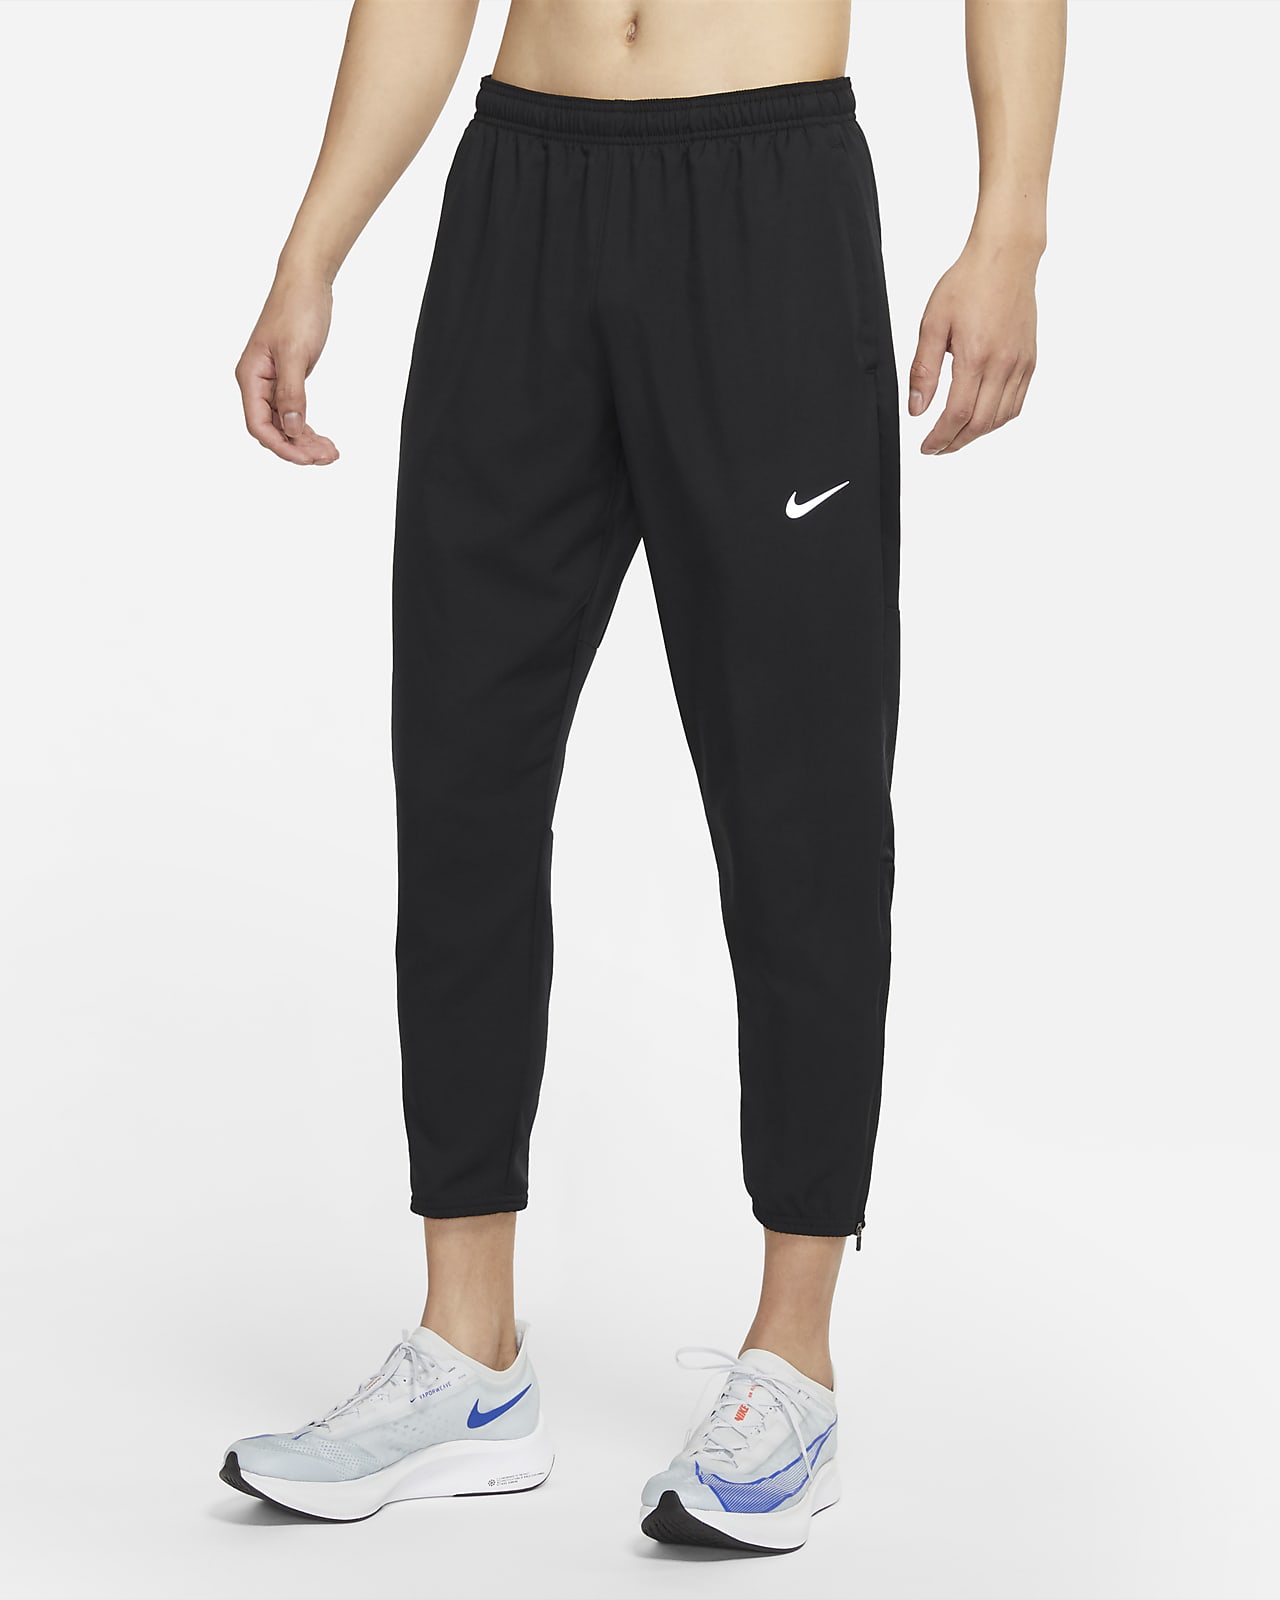 Nike Dri-FIT Challenger Men's Woven Running Trousers